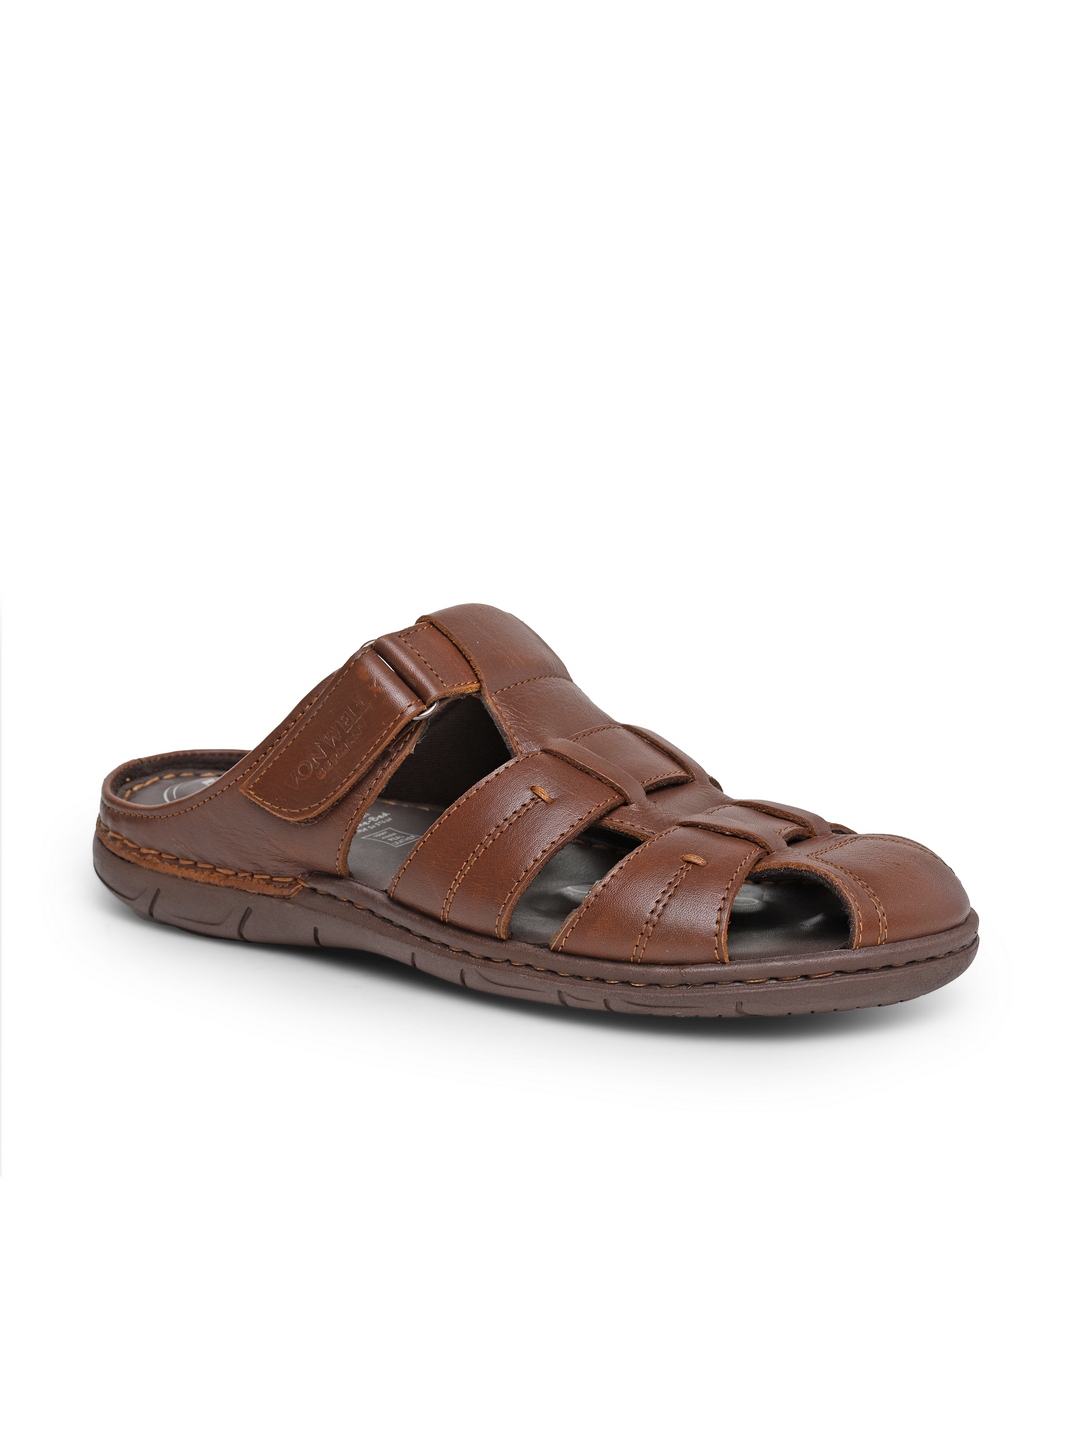 Buy VON WELLX GERMANY comfort men's tan sandal DAVIS In Delhi